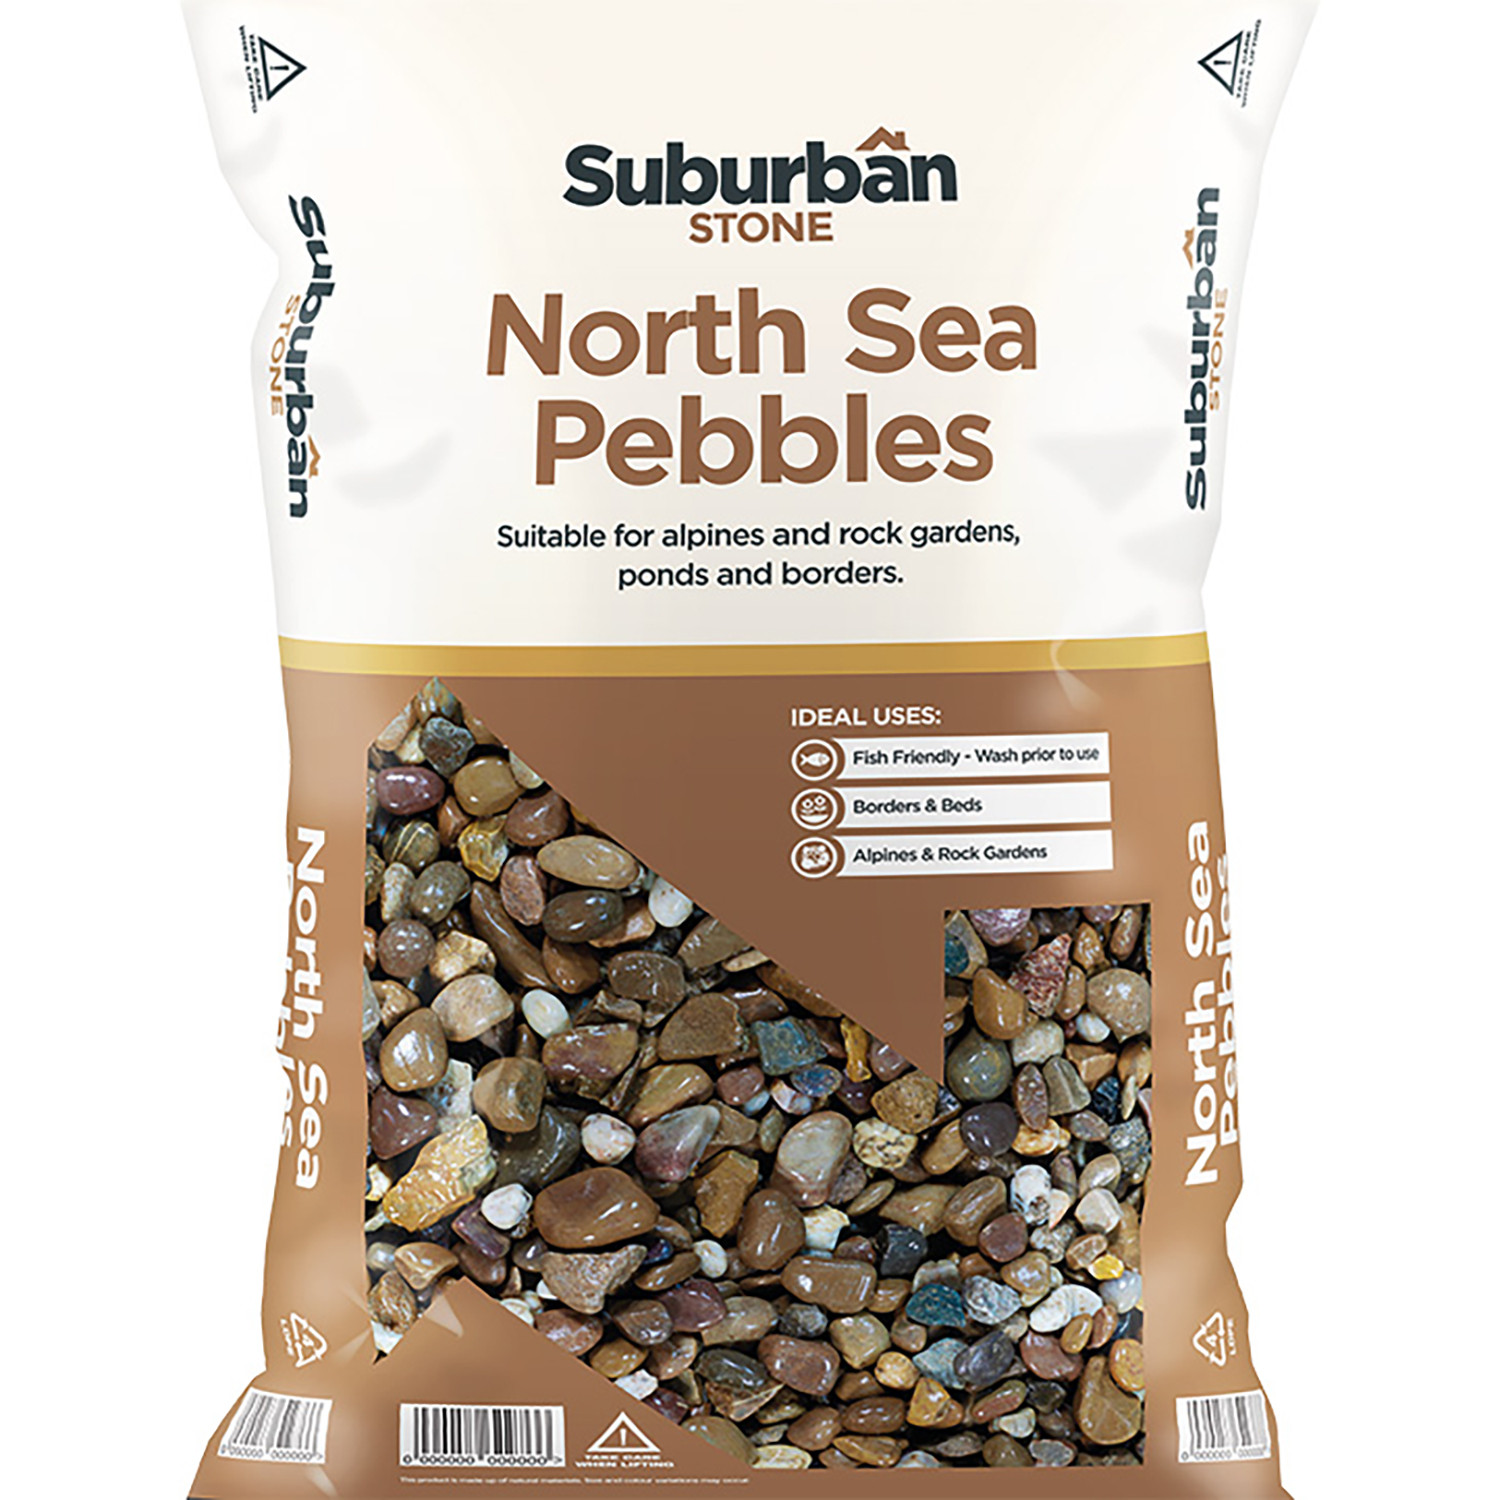 Suburban Stone North Sea Pebbles Chippings 20kg Image